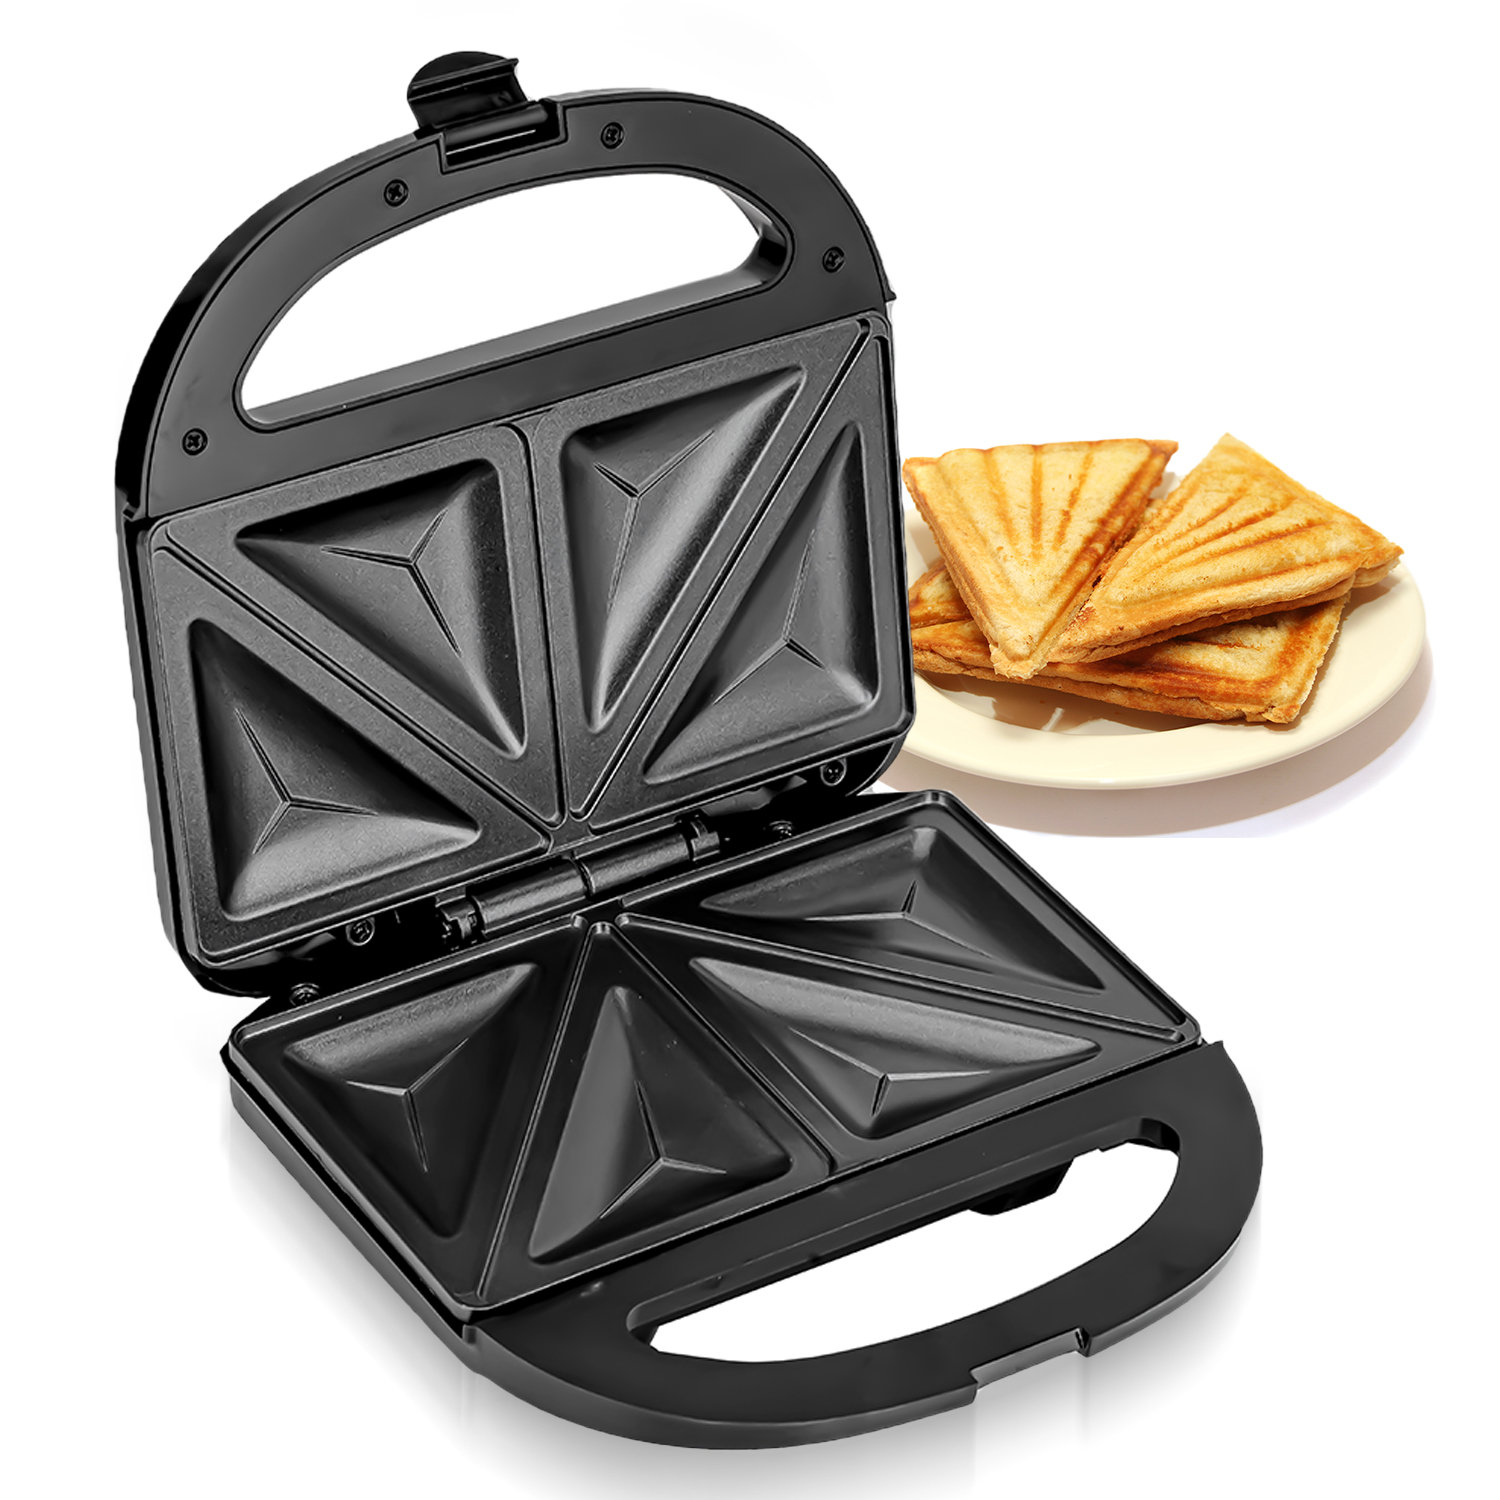 VONSHEF - 2 Slice Deep Fill Toasted Sandwich Maker